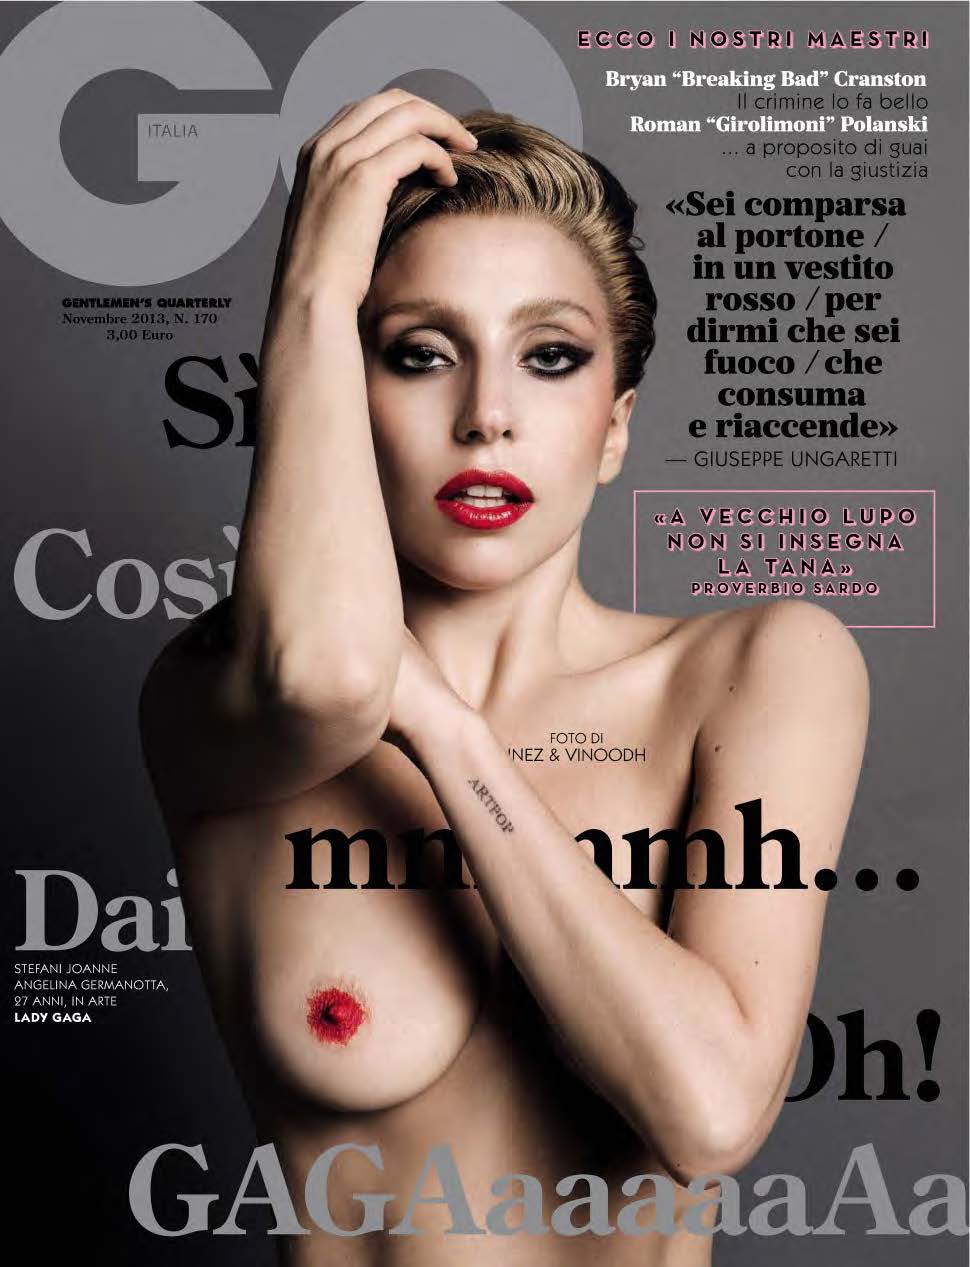 Lady Gaga for GQ Italia